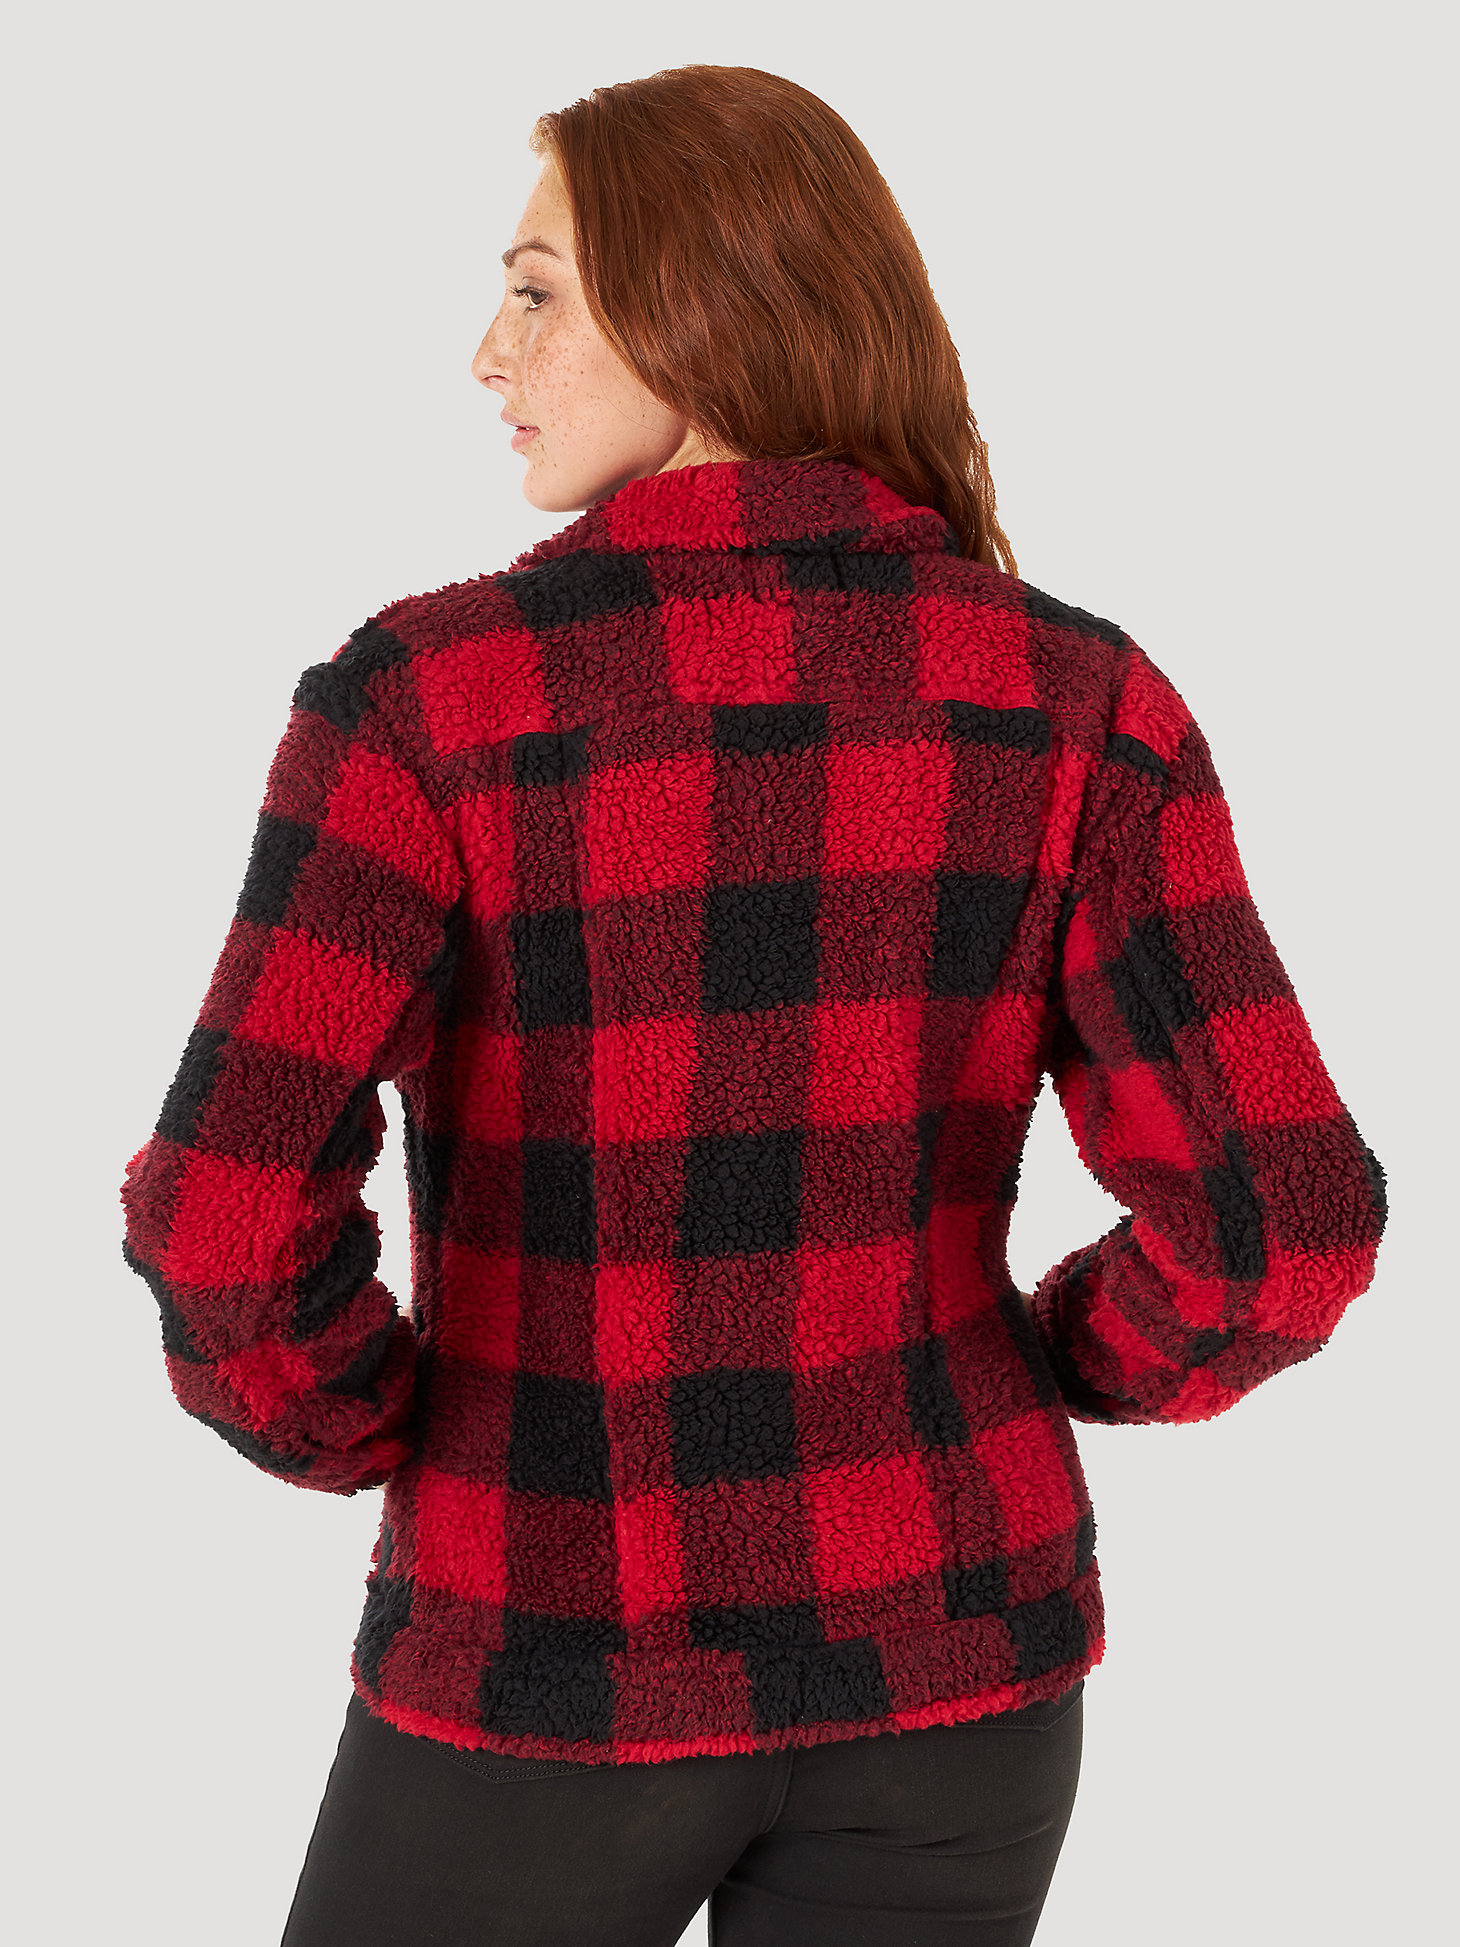 Women's Wrangler® Fleece Memory Maker Plaid Jacket in Buffalo Plaid alternative view 1